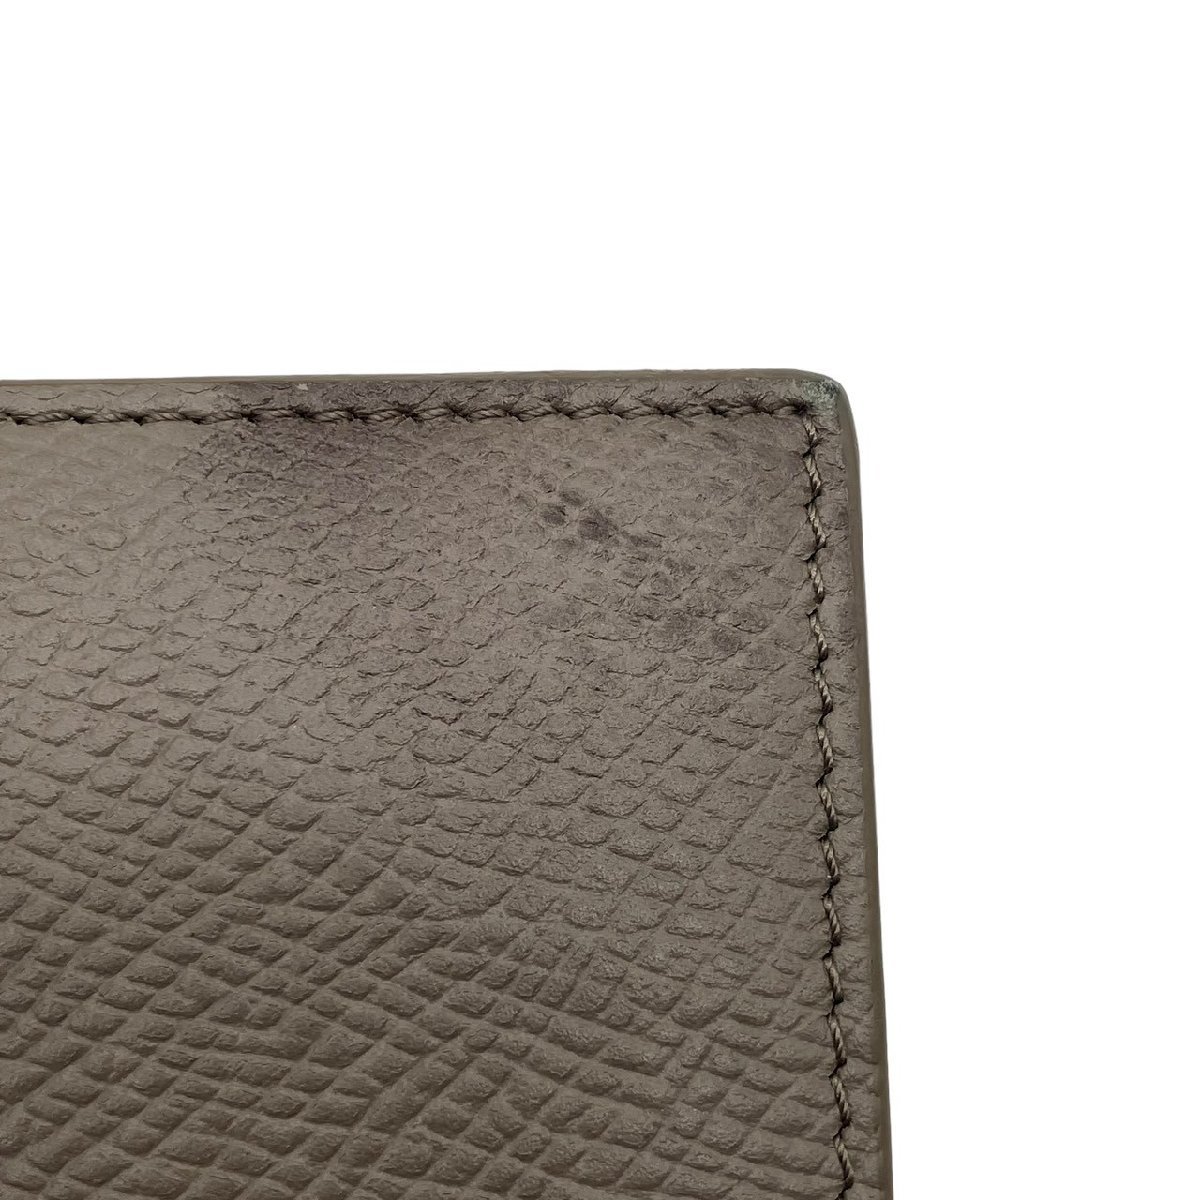 CELINE セリーヌ ミディアム レザー ストラップウォレット 二つ折り 財布 グレー系 保存袋・元箱付き